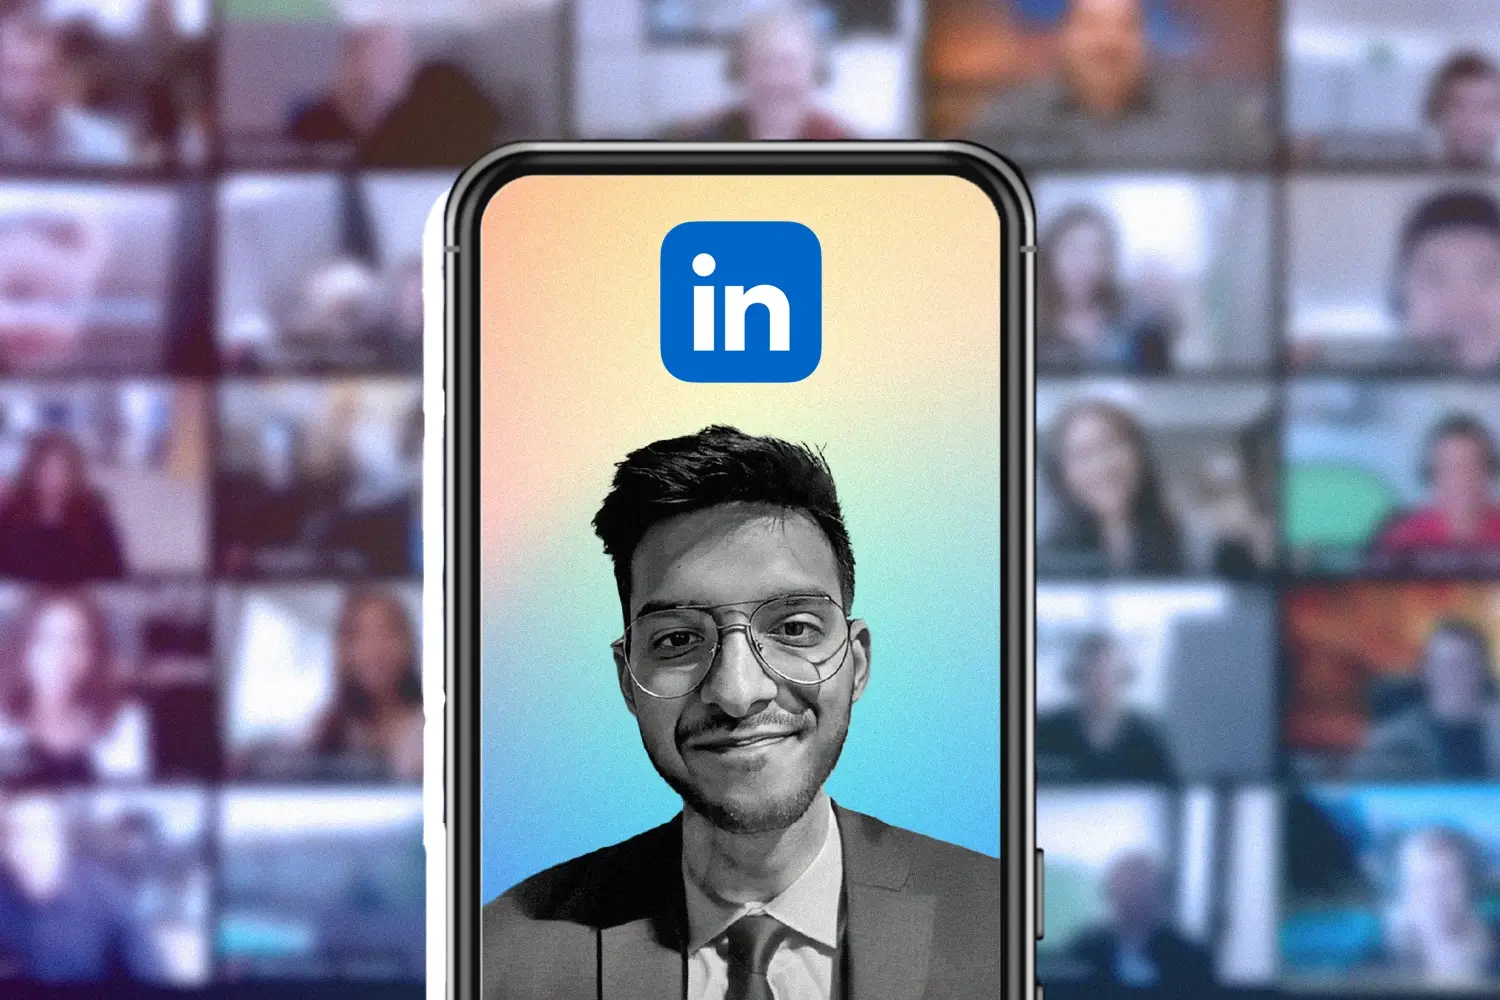 Photo of a Fintech professional through LinkedIn Videos.